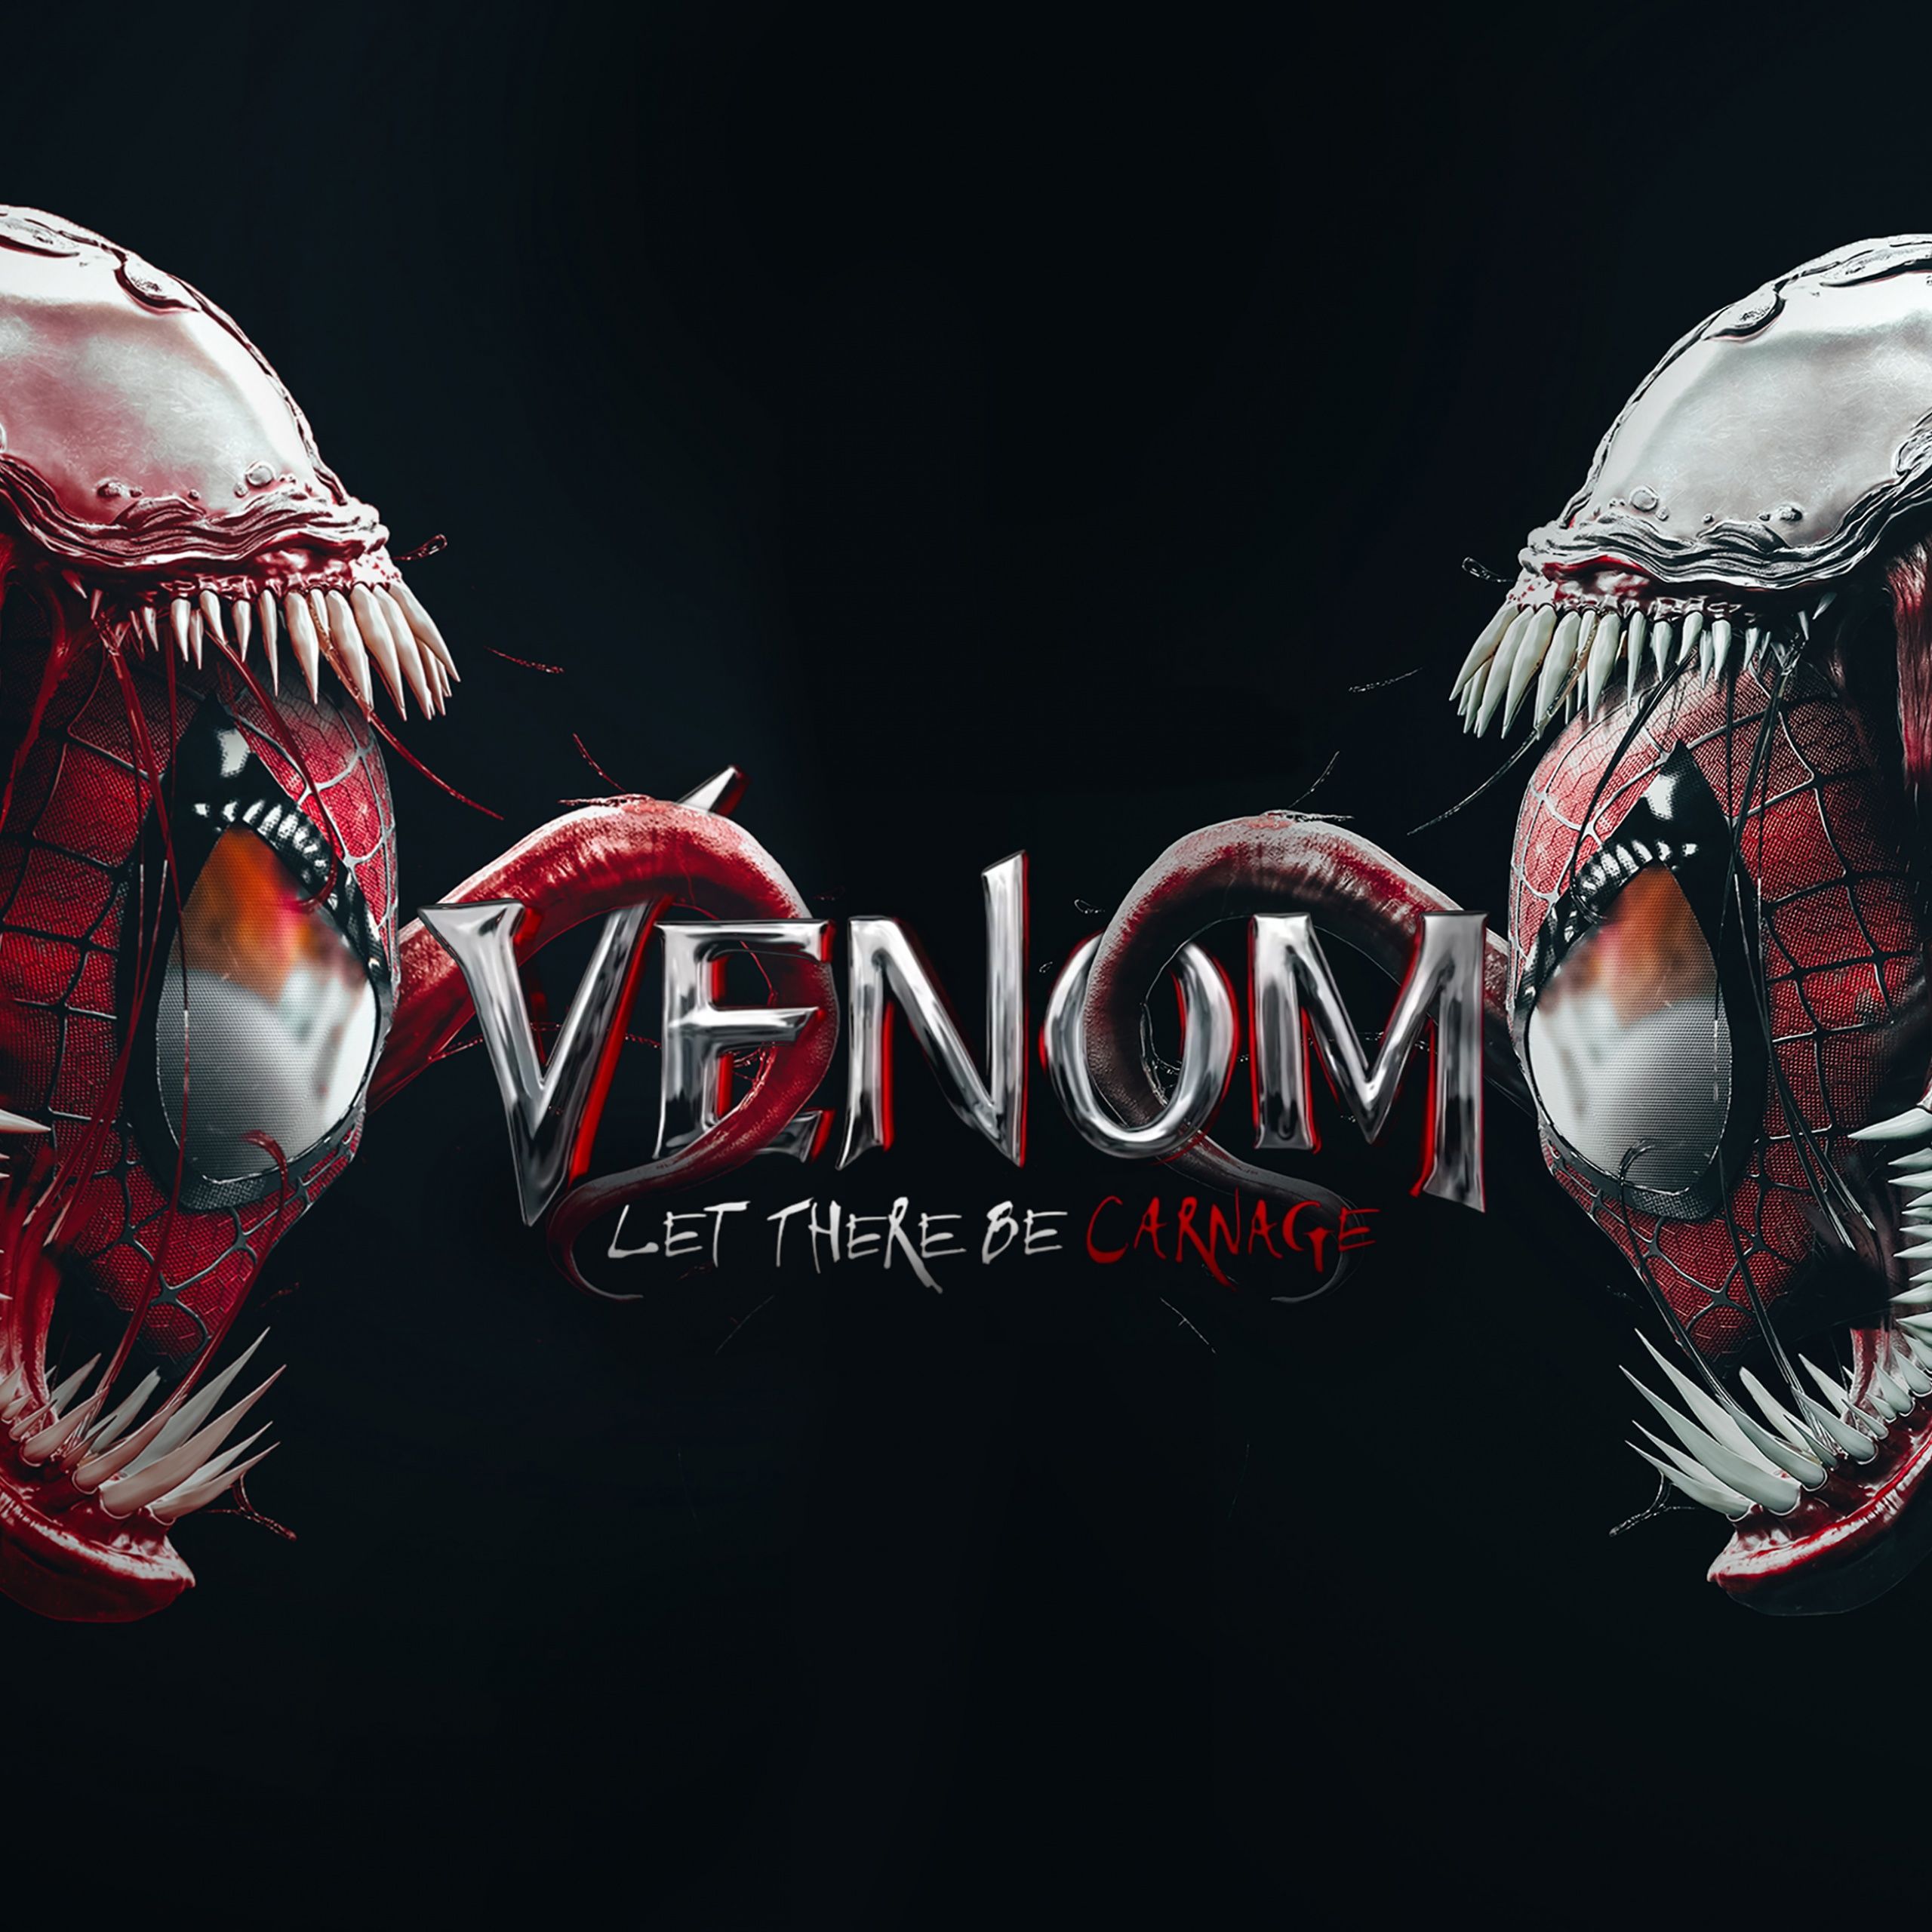 Venom 4K Wallpaper, Spider Man, Carnage, Black Background, Marvel Superheroes, Fan Art, Graphics CGI